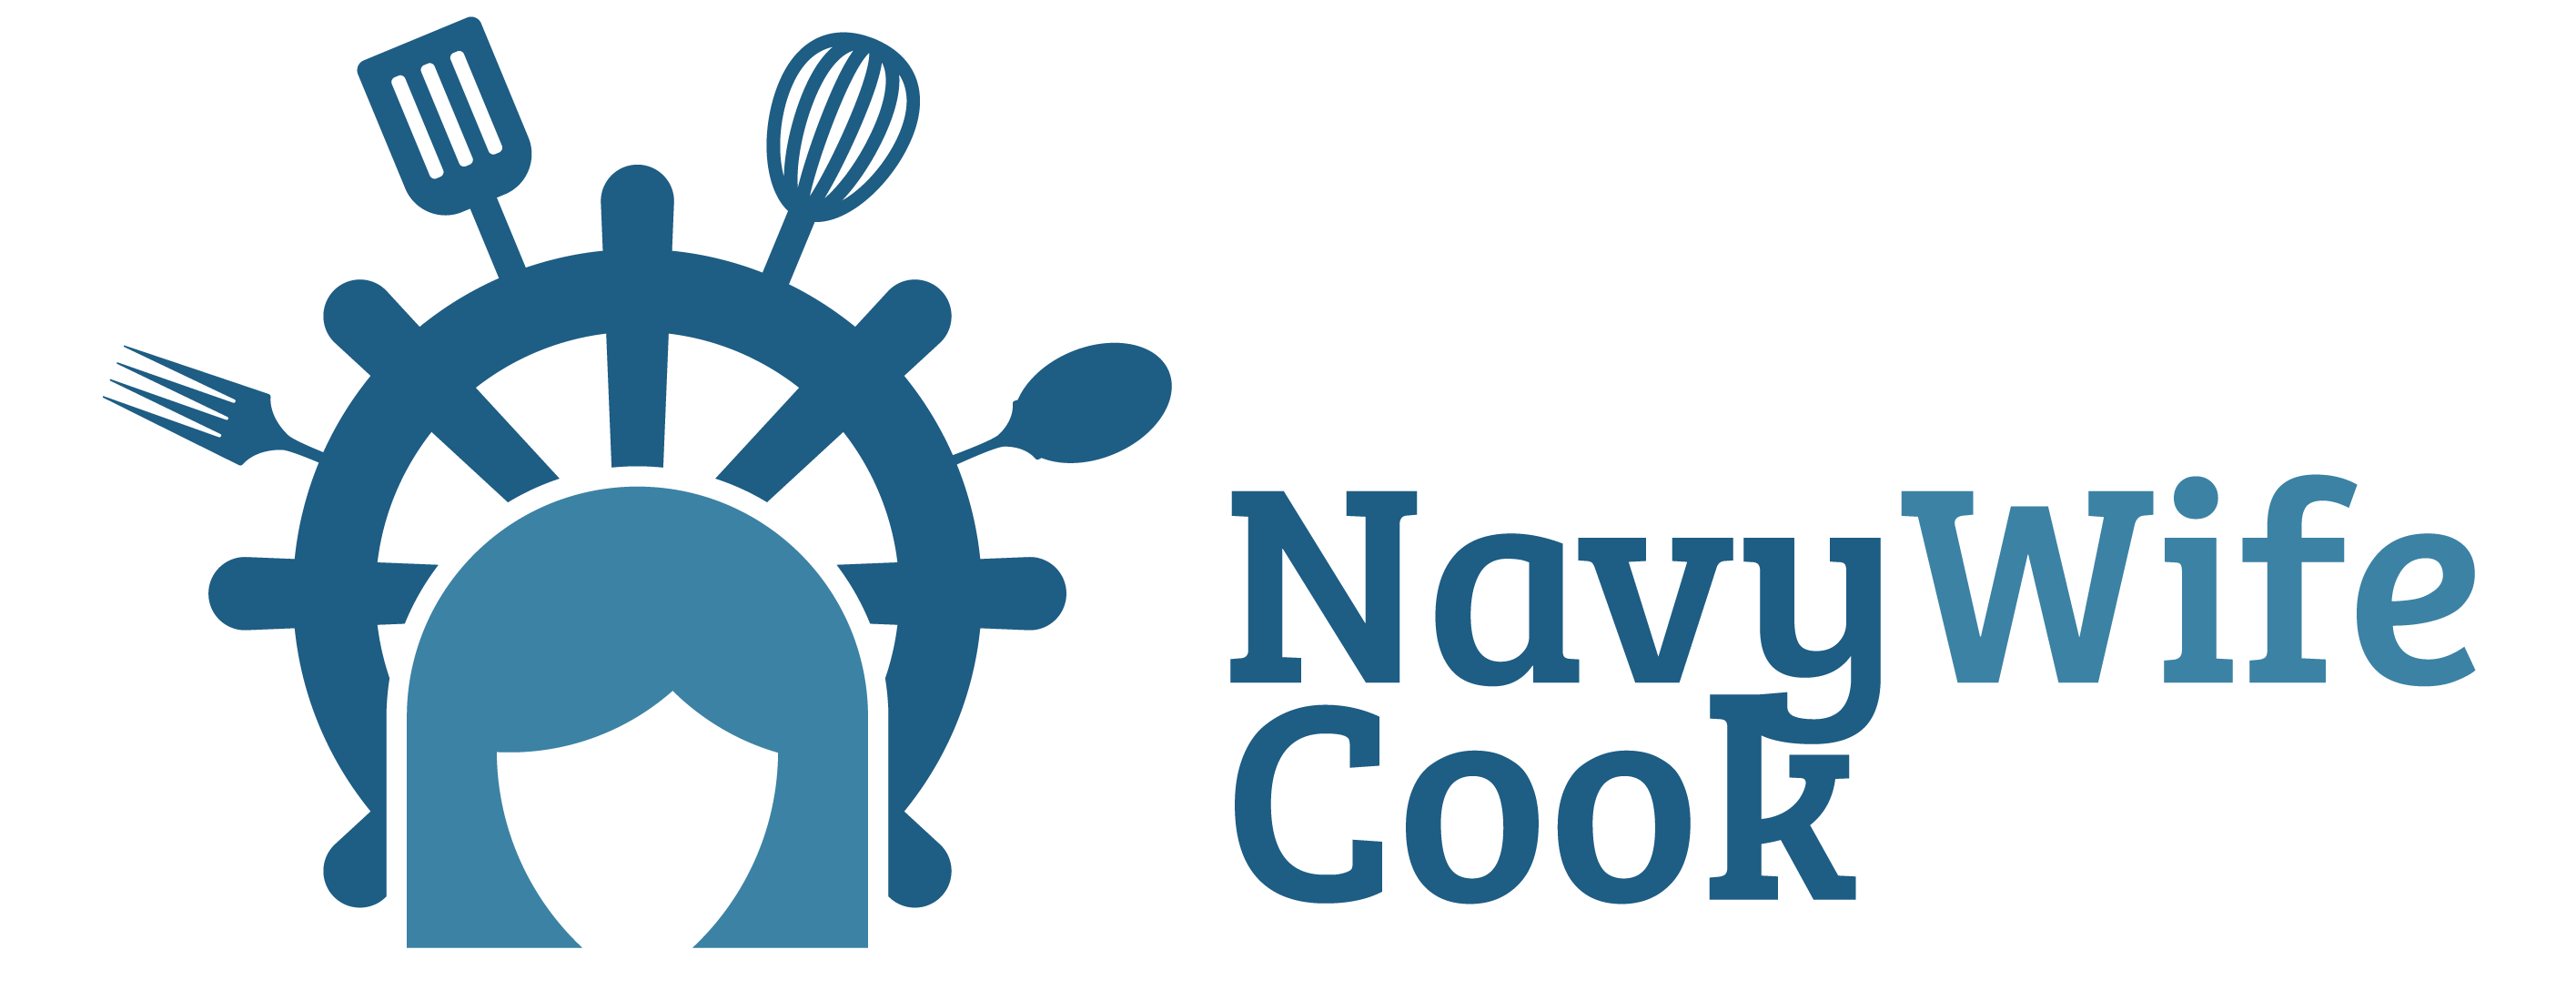 Navy Wife Cook-logo